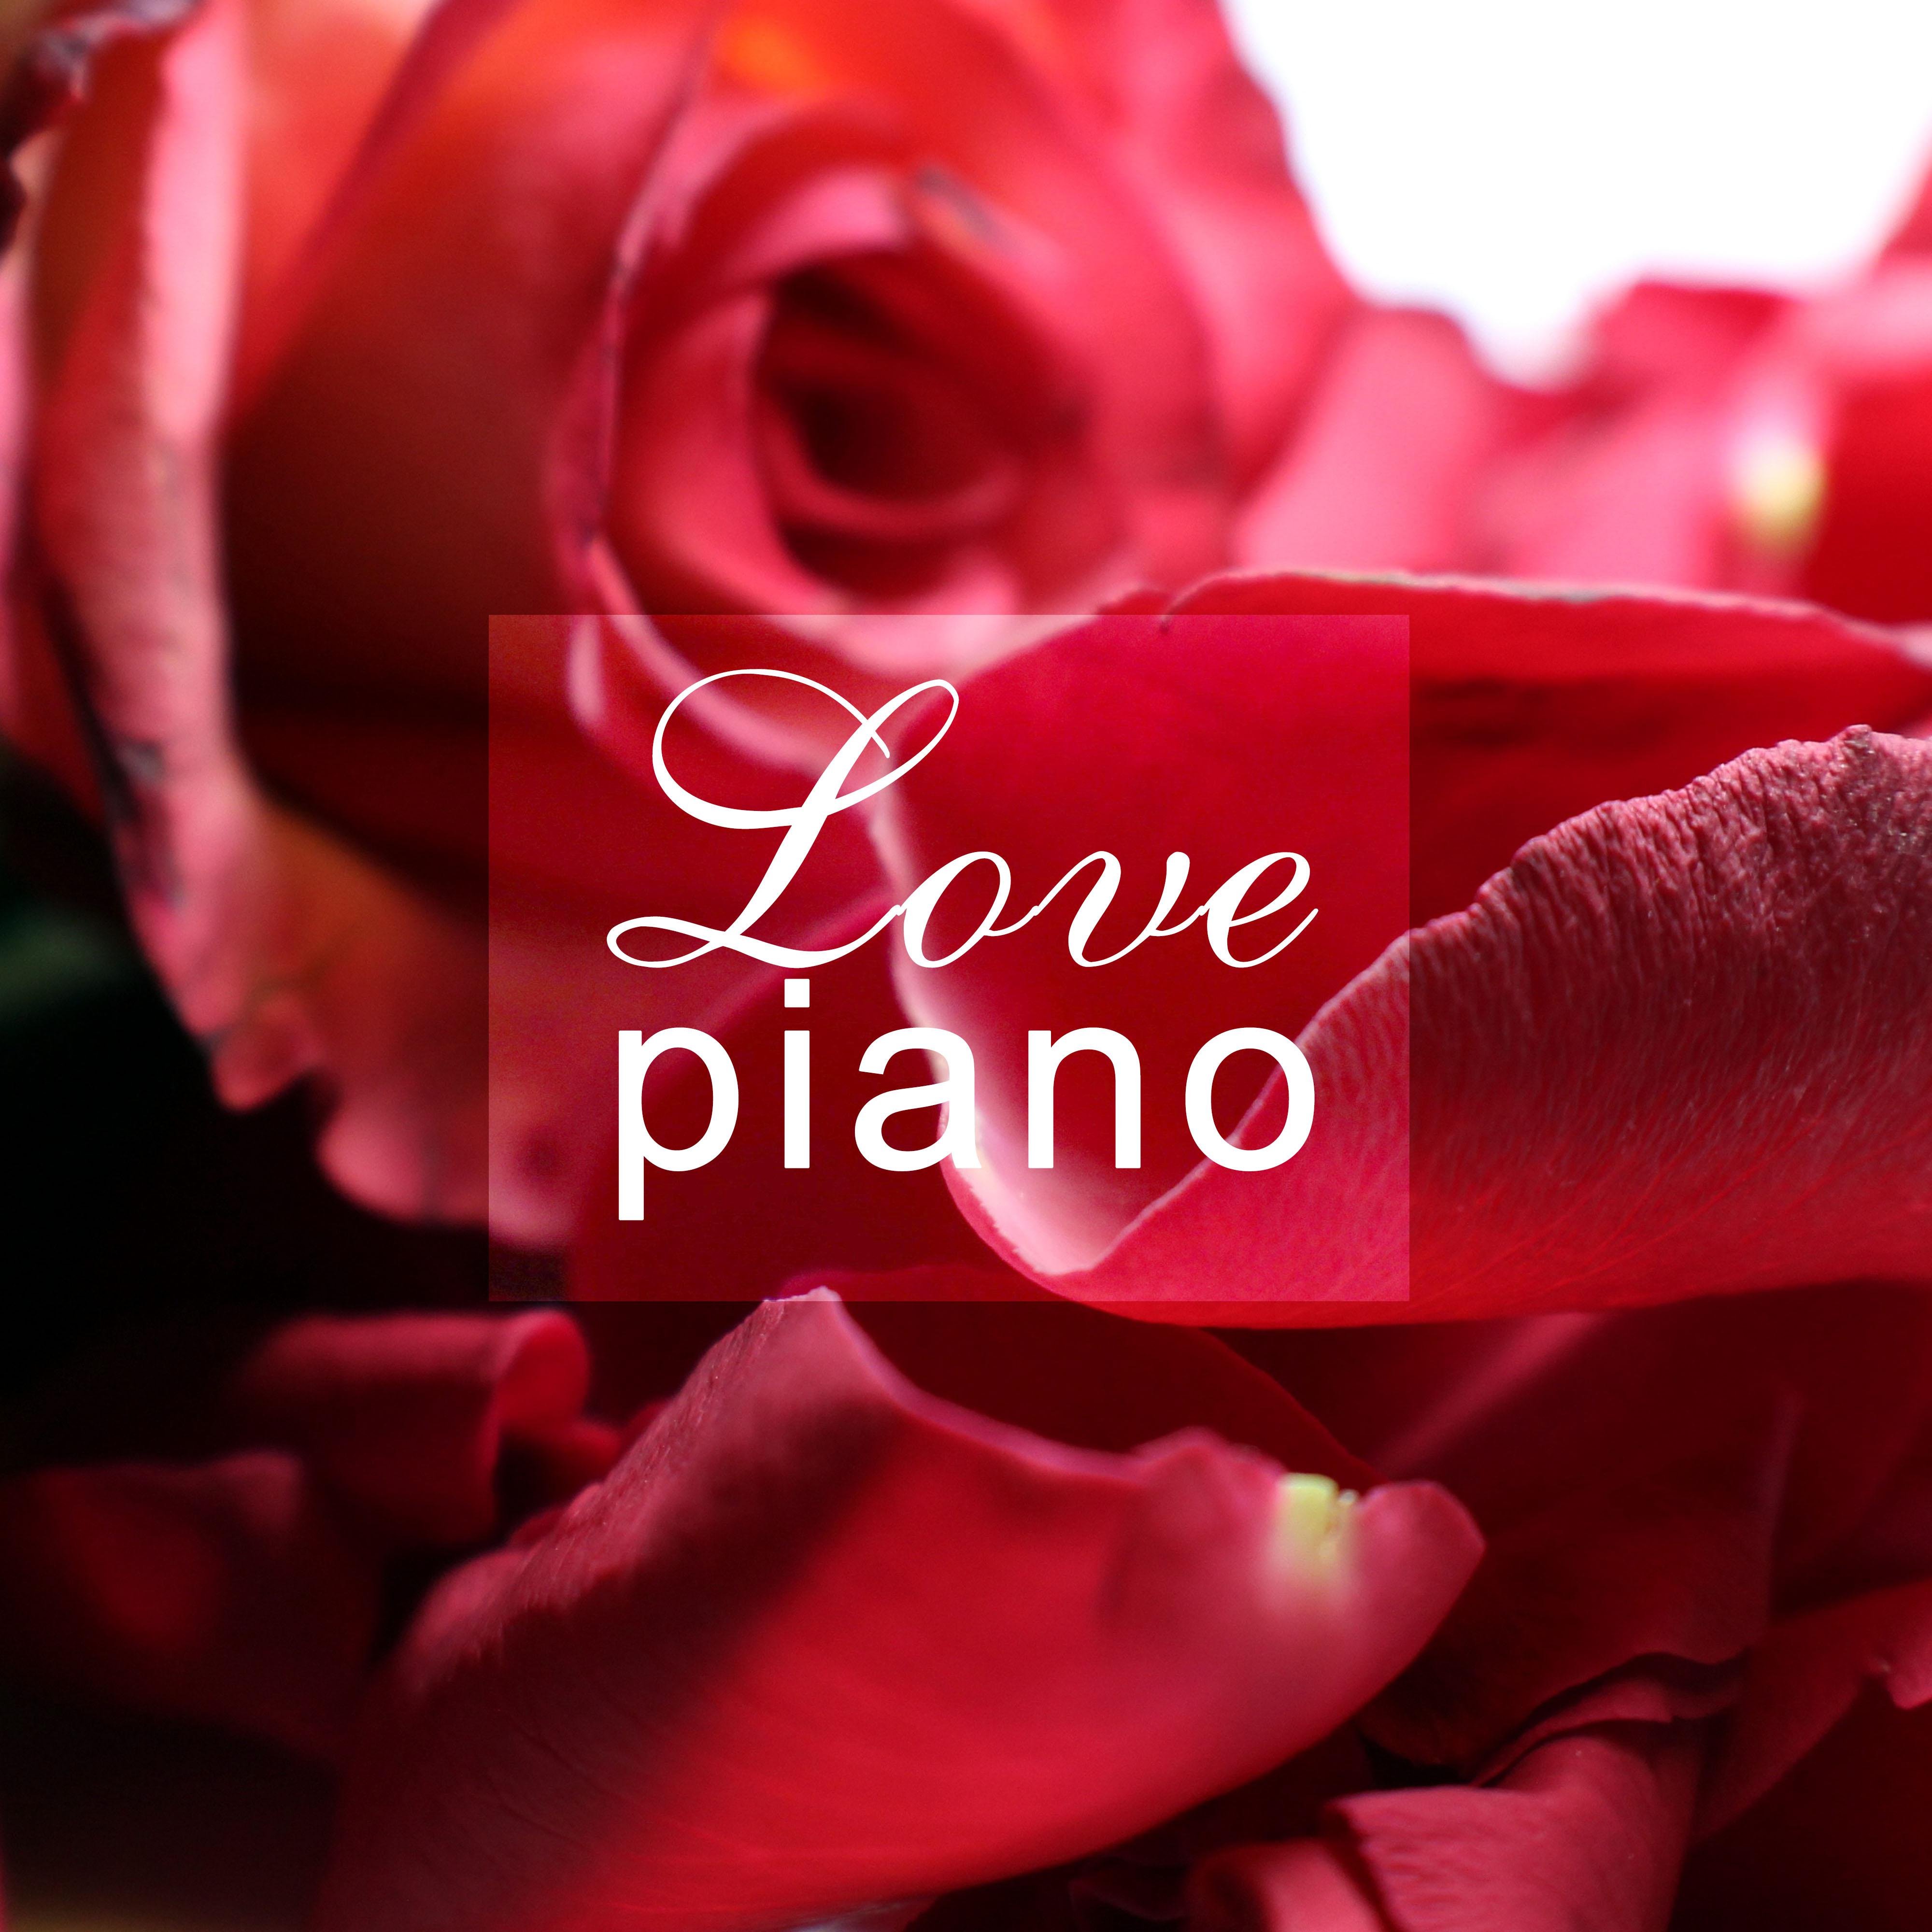 Love Piano  Jazz Lounge, Smooth  Piano Music, Modern Instrumental Jazz, Mellow Vibes Romantic Jazz Sounds